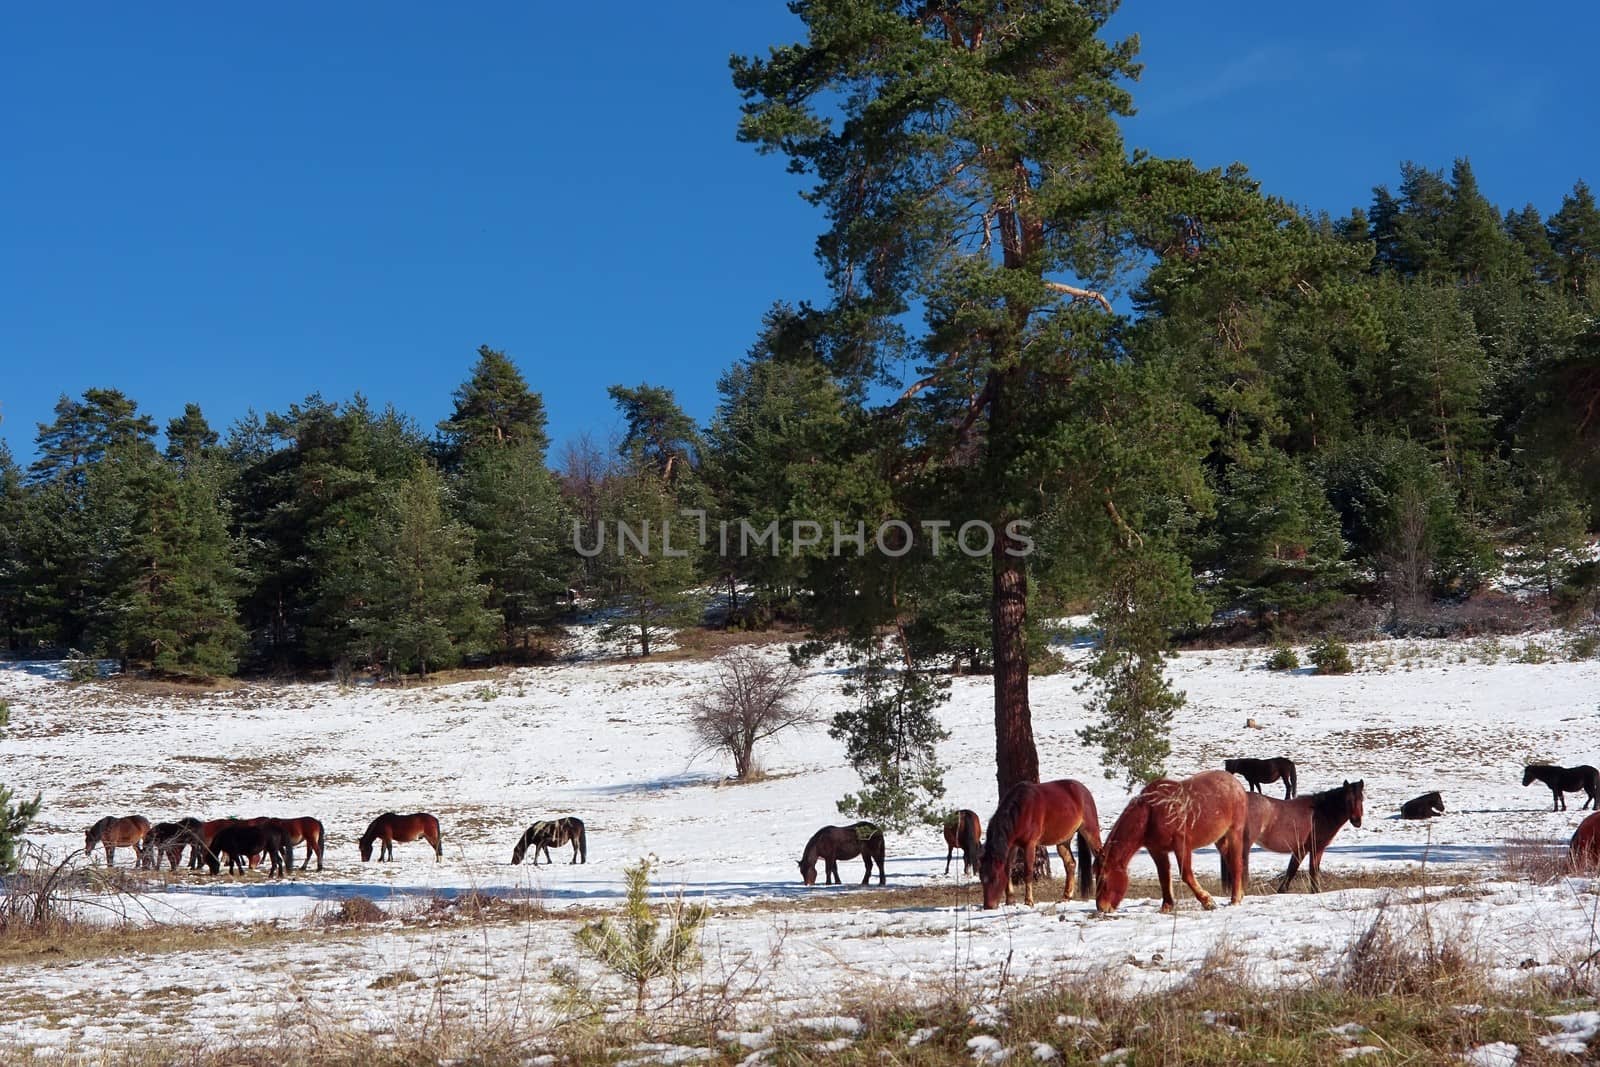 Horses in snowy rolling meadow by mitakag